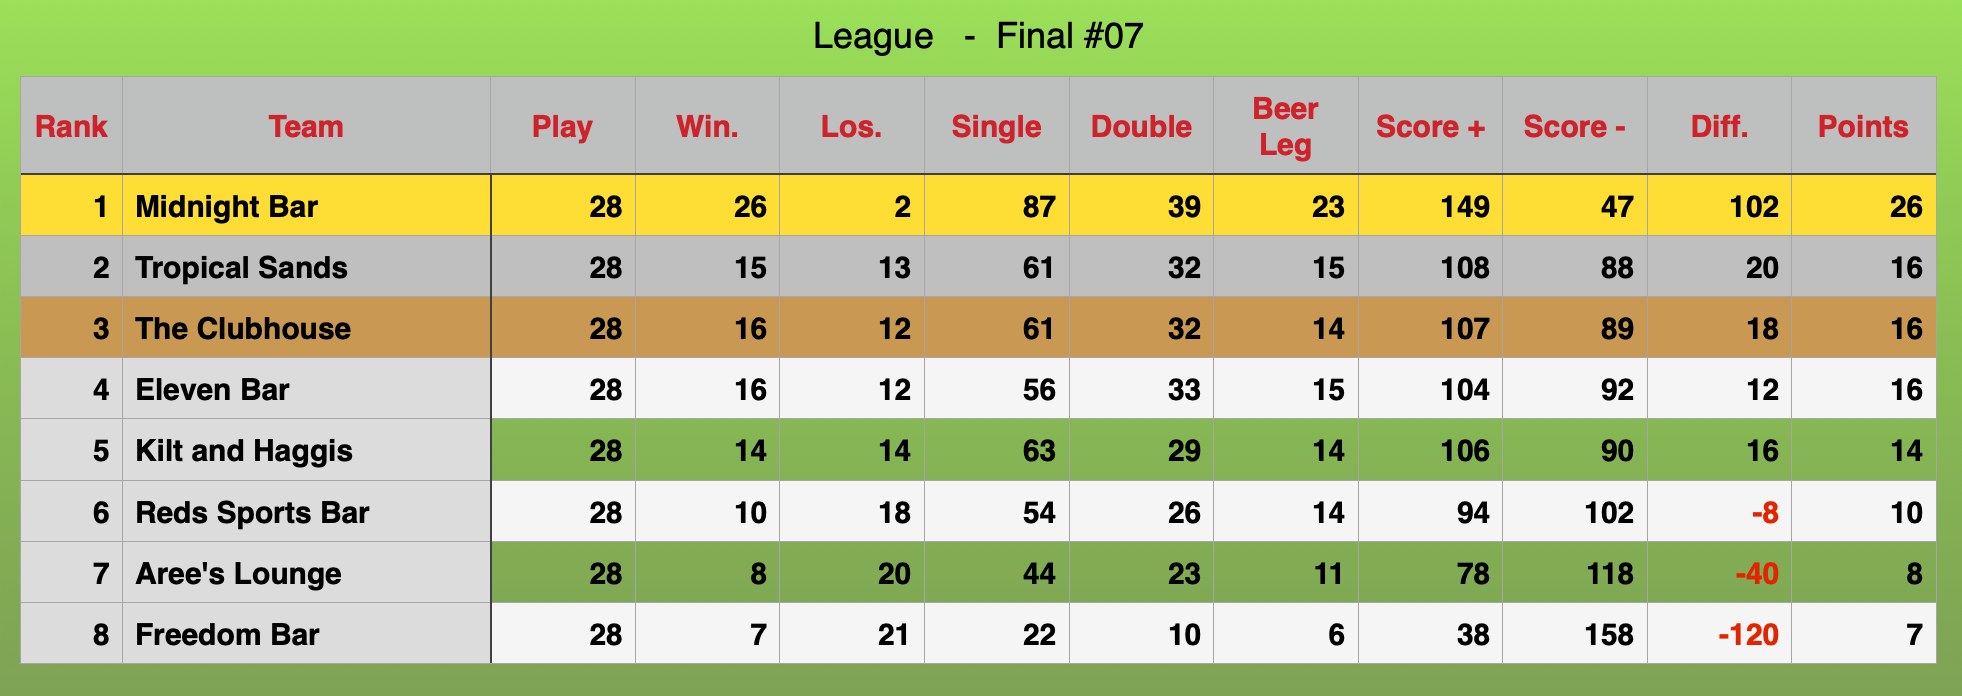 League Rankings